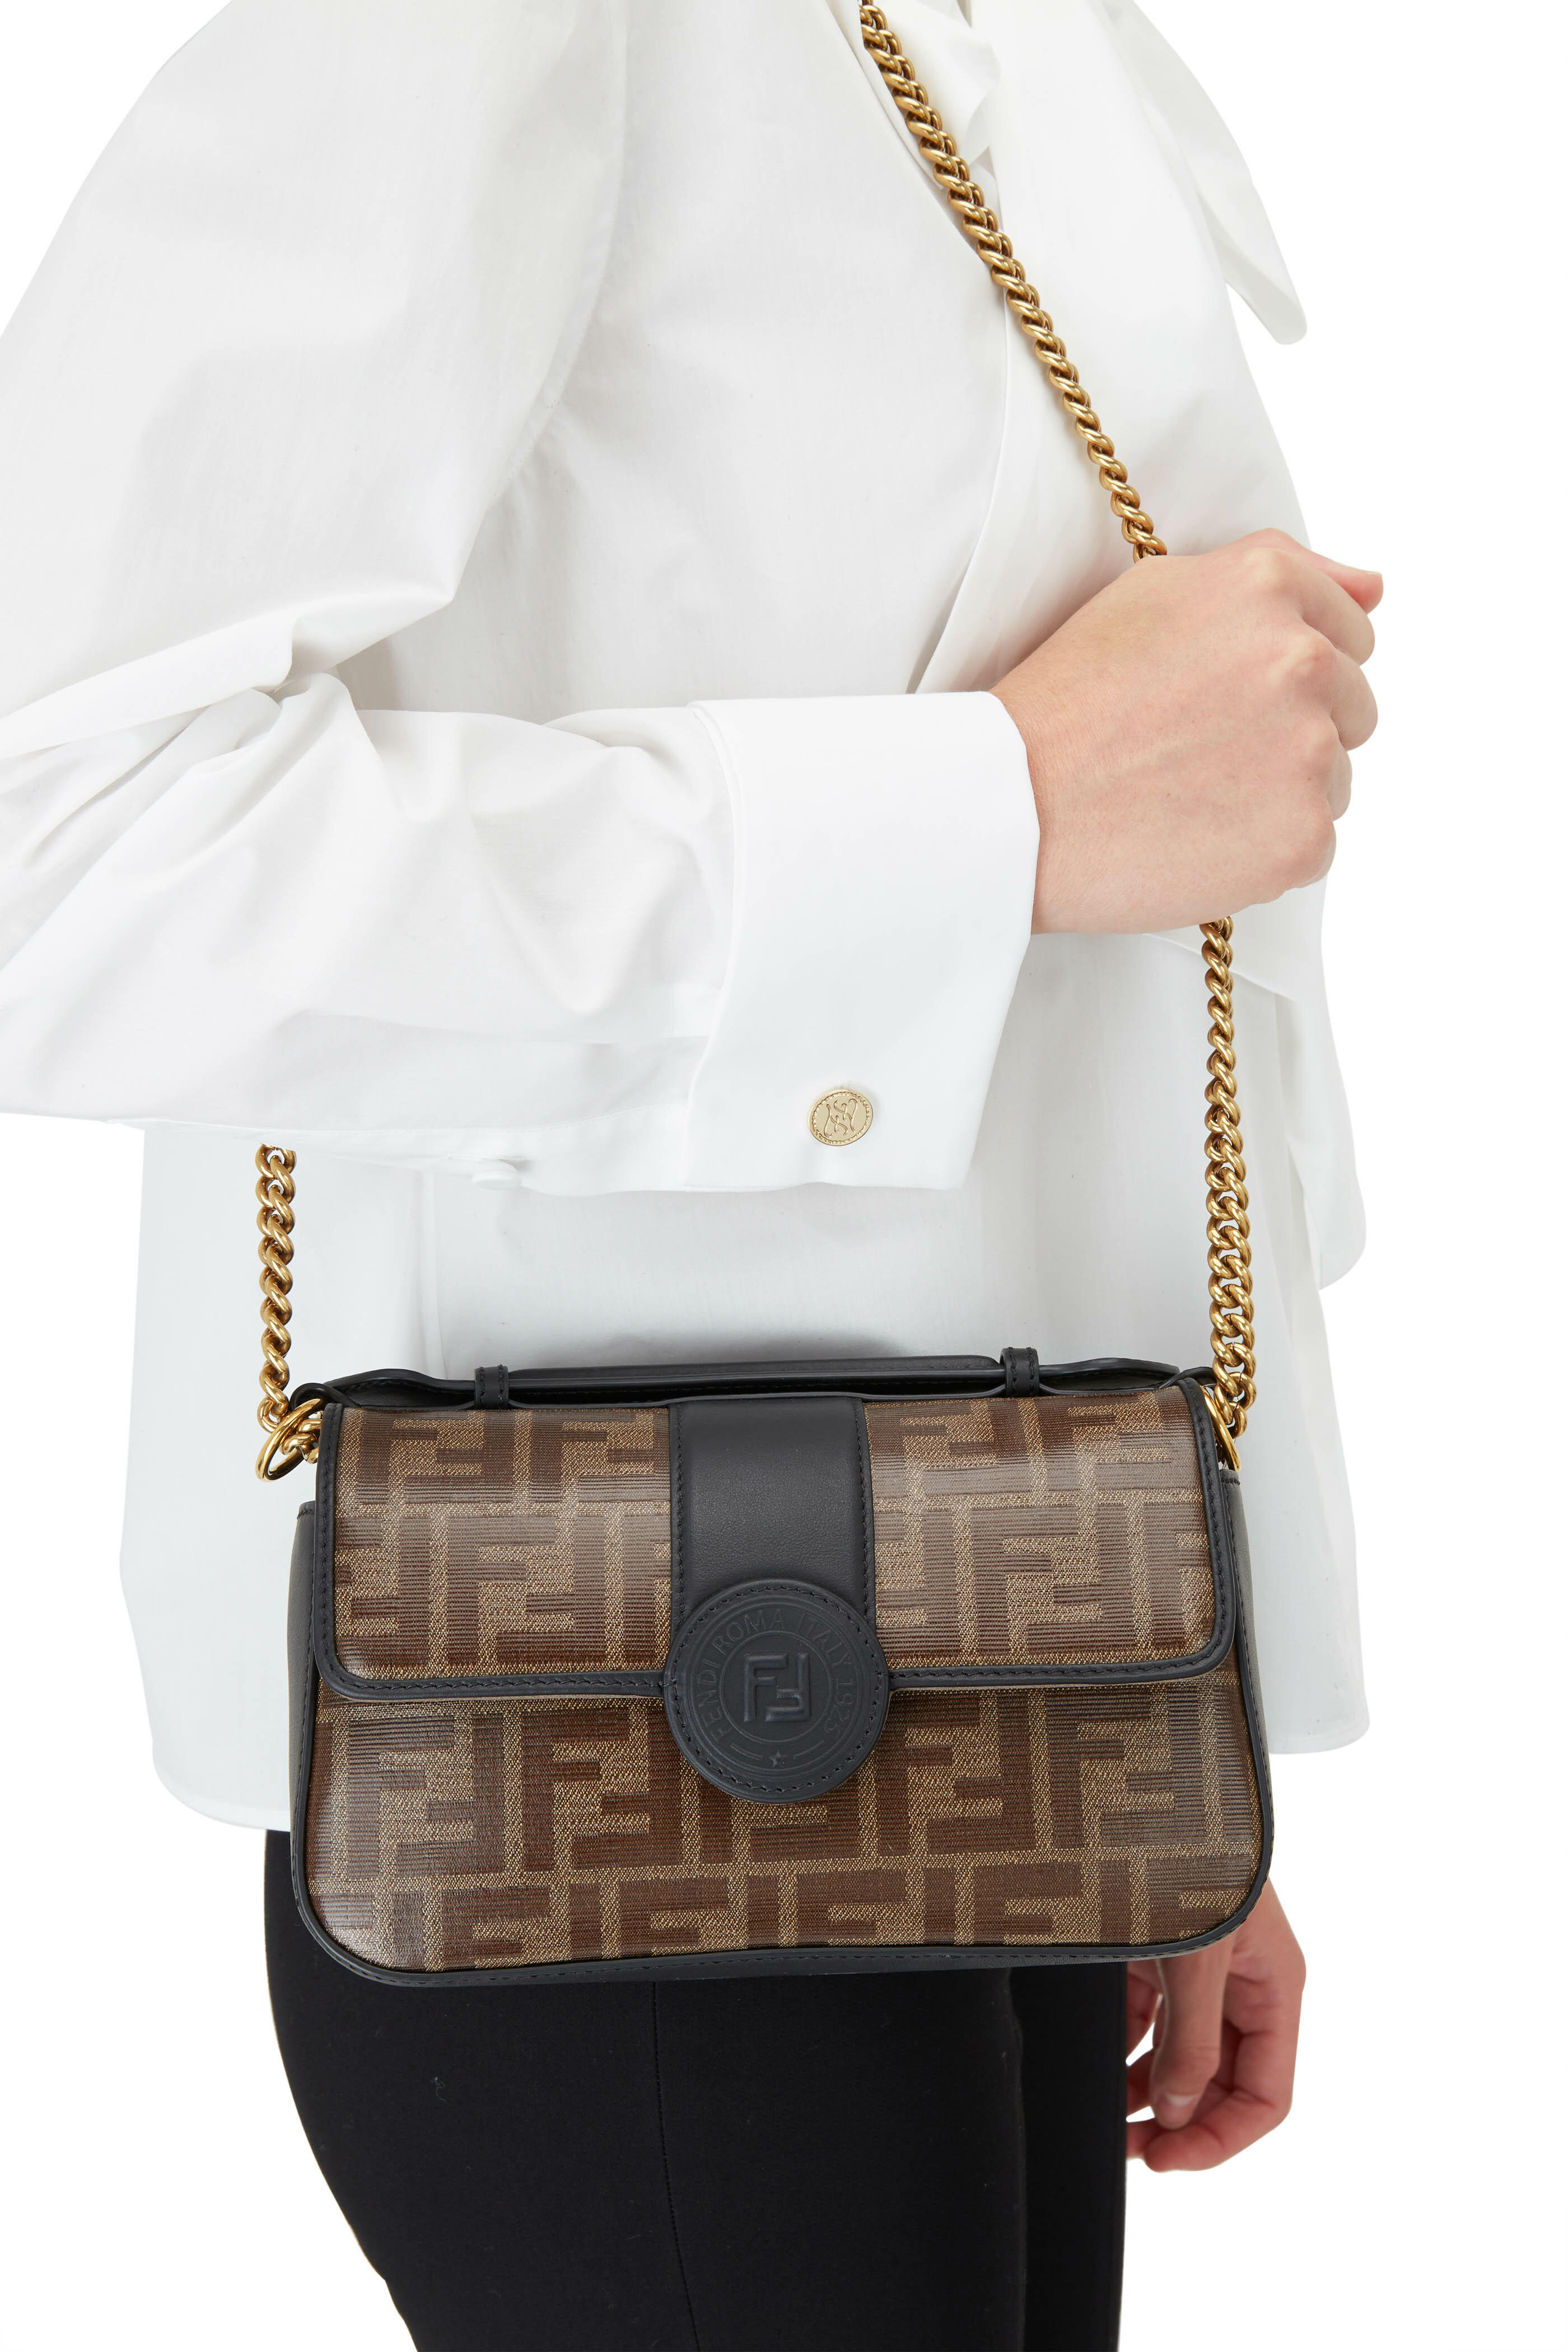 Fendi - Authenticated Double F Handbag - Leather Black for Women, Good Condition